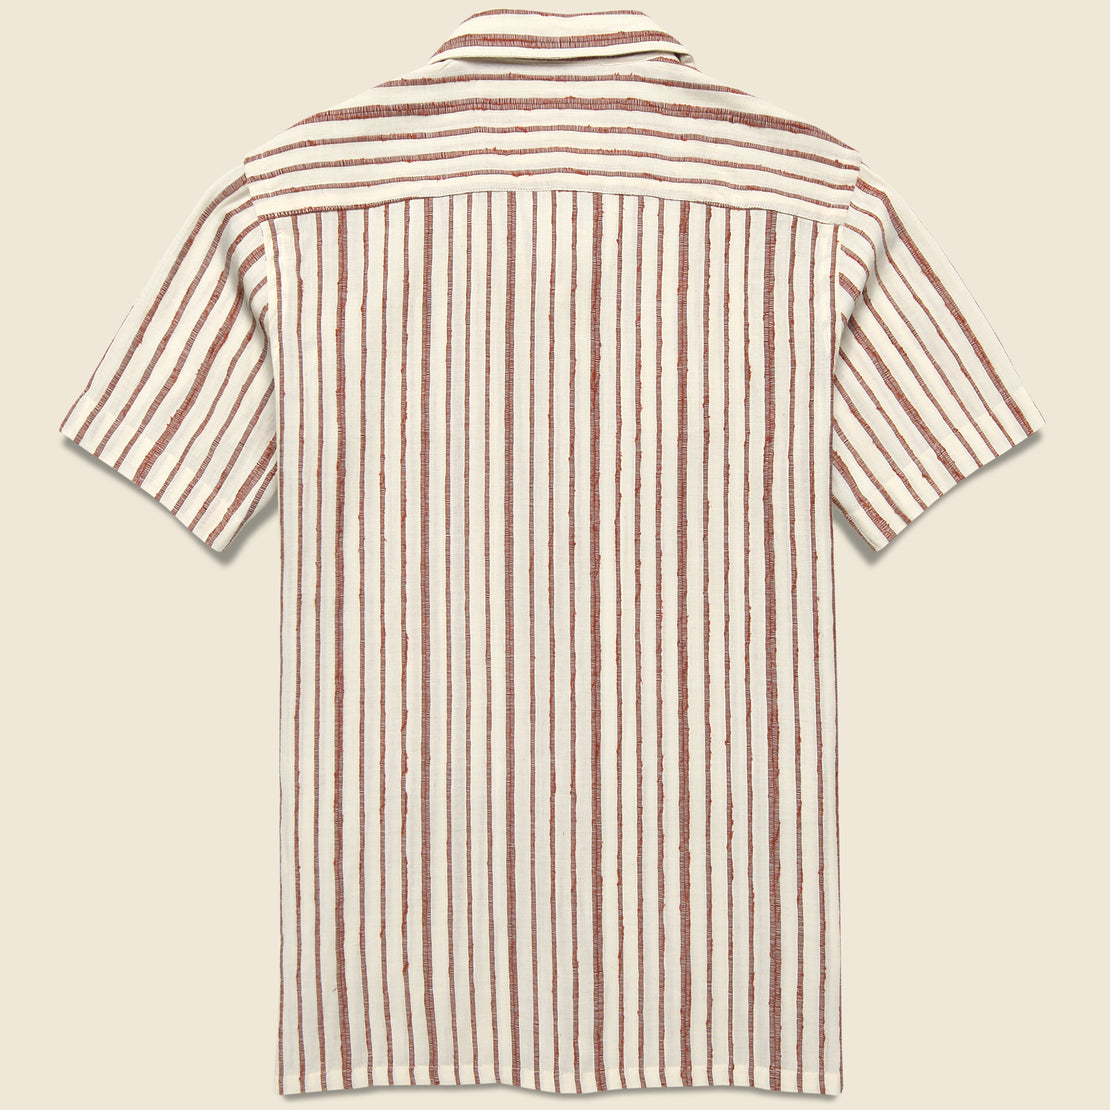 Handwoven Stripe Shirt - Brick - Kardo - STAG Provisions - Tops - S/S Woven - Stripe